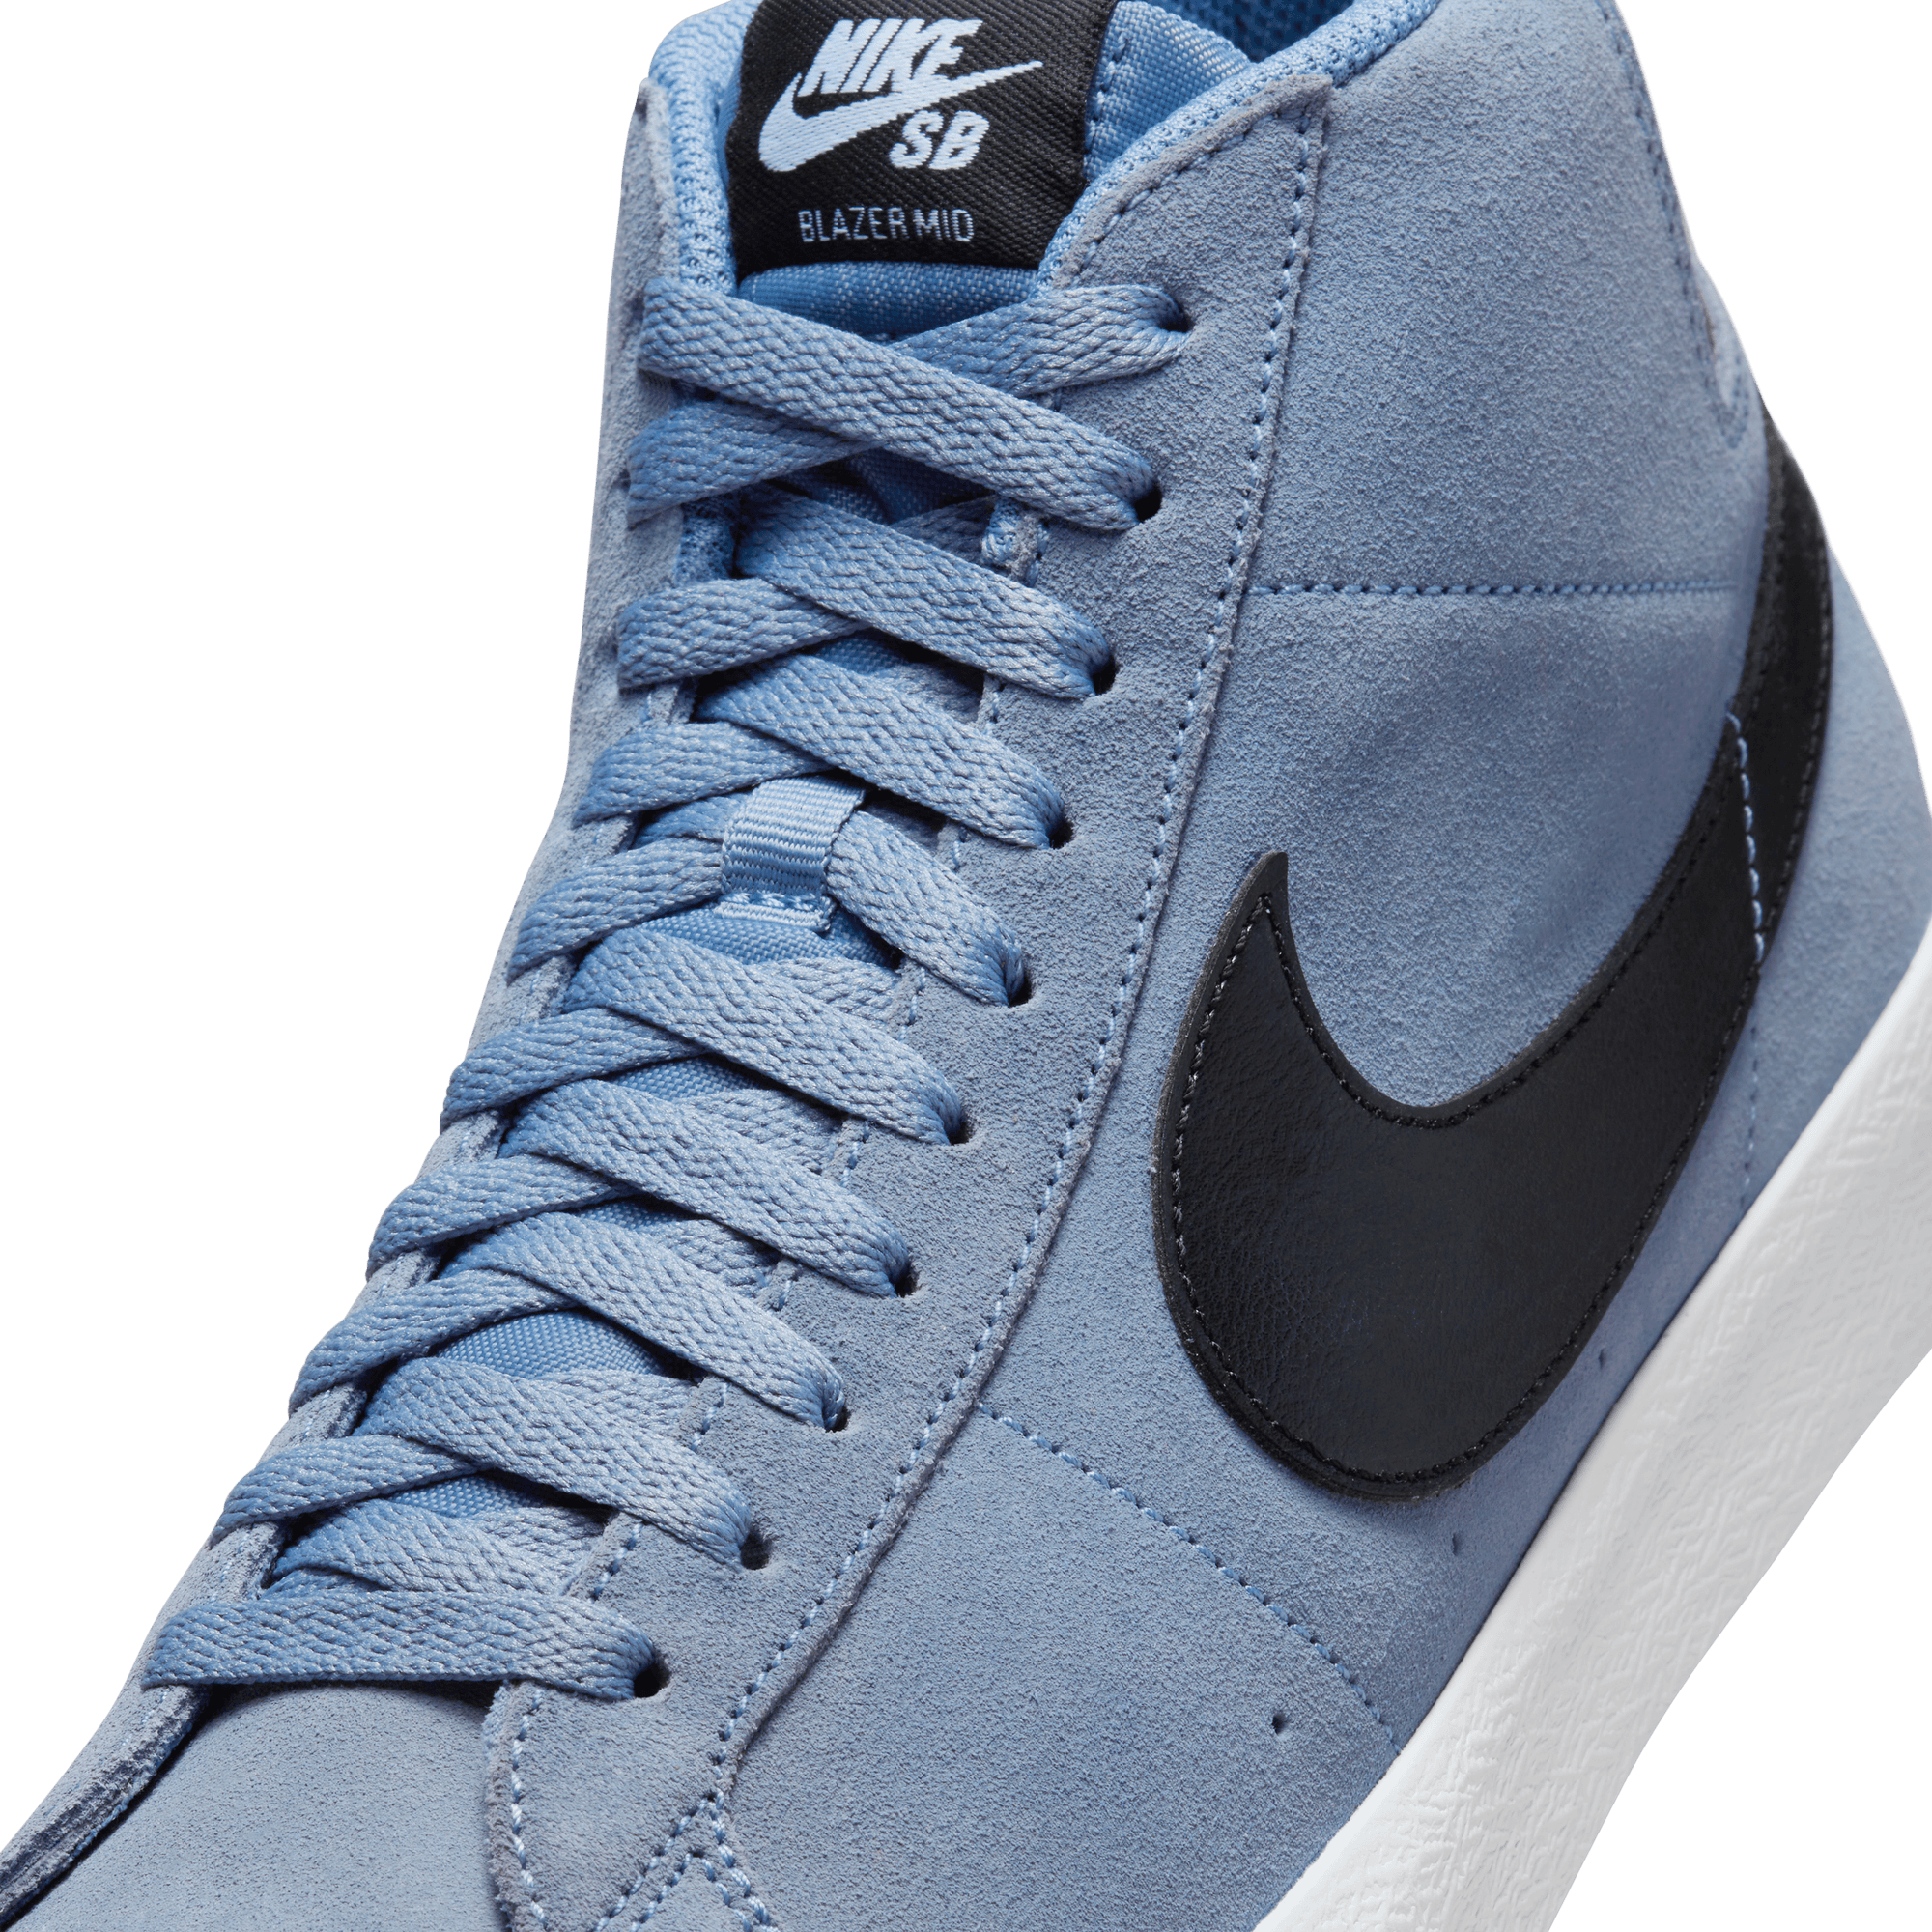 Ashen Slate Blazer Mid Nike SB Skate Shoe Detail